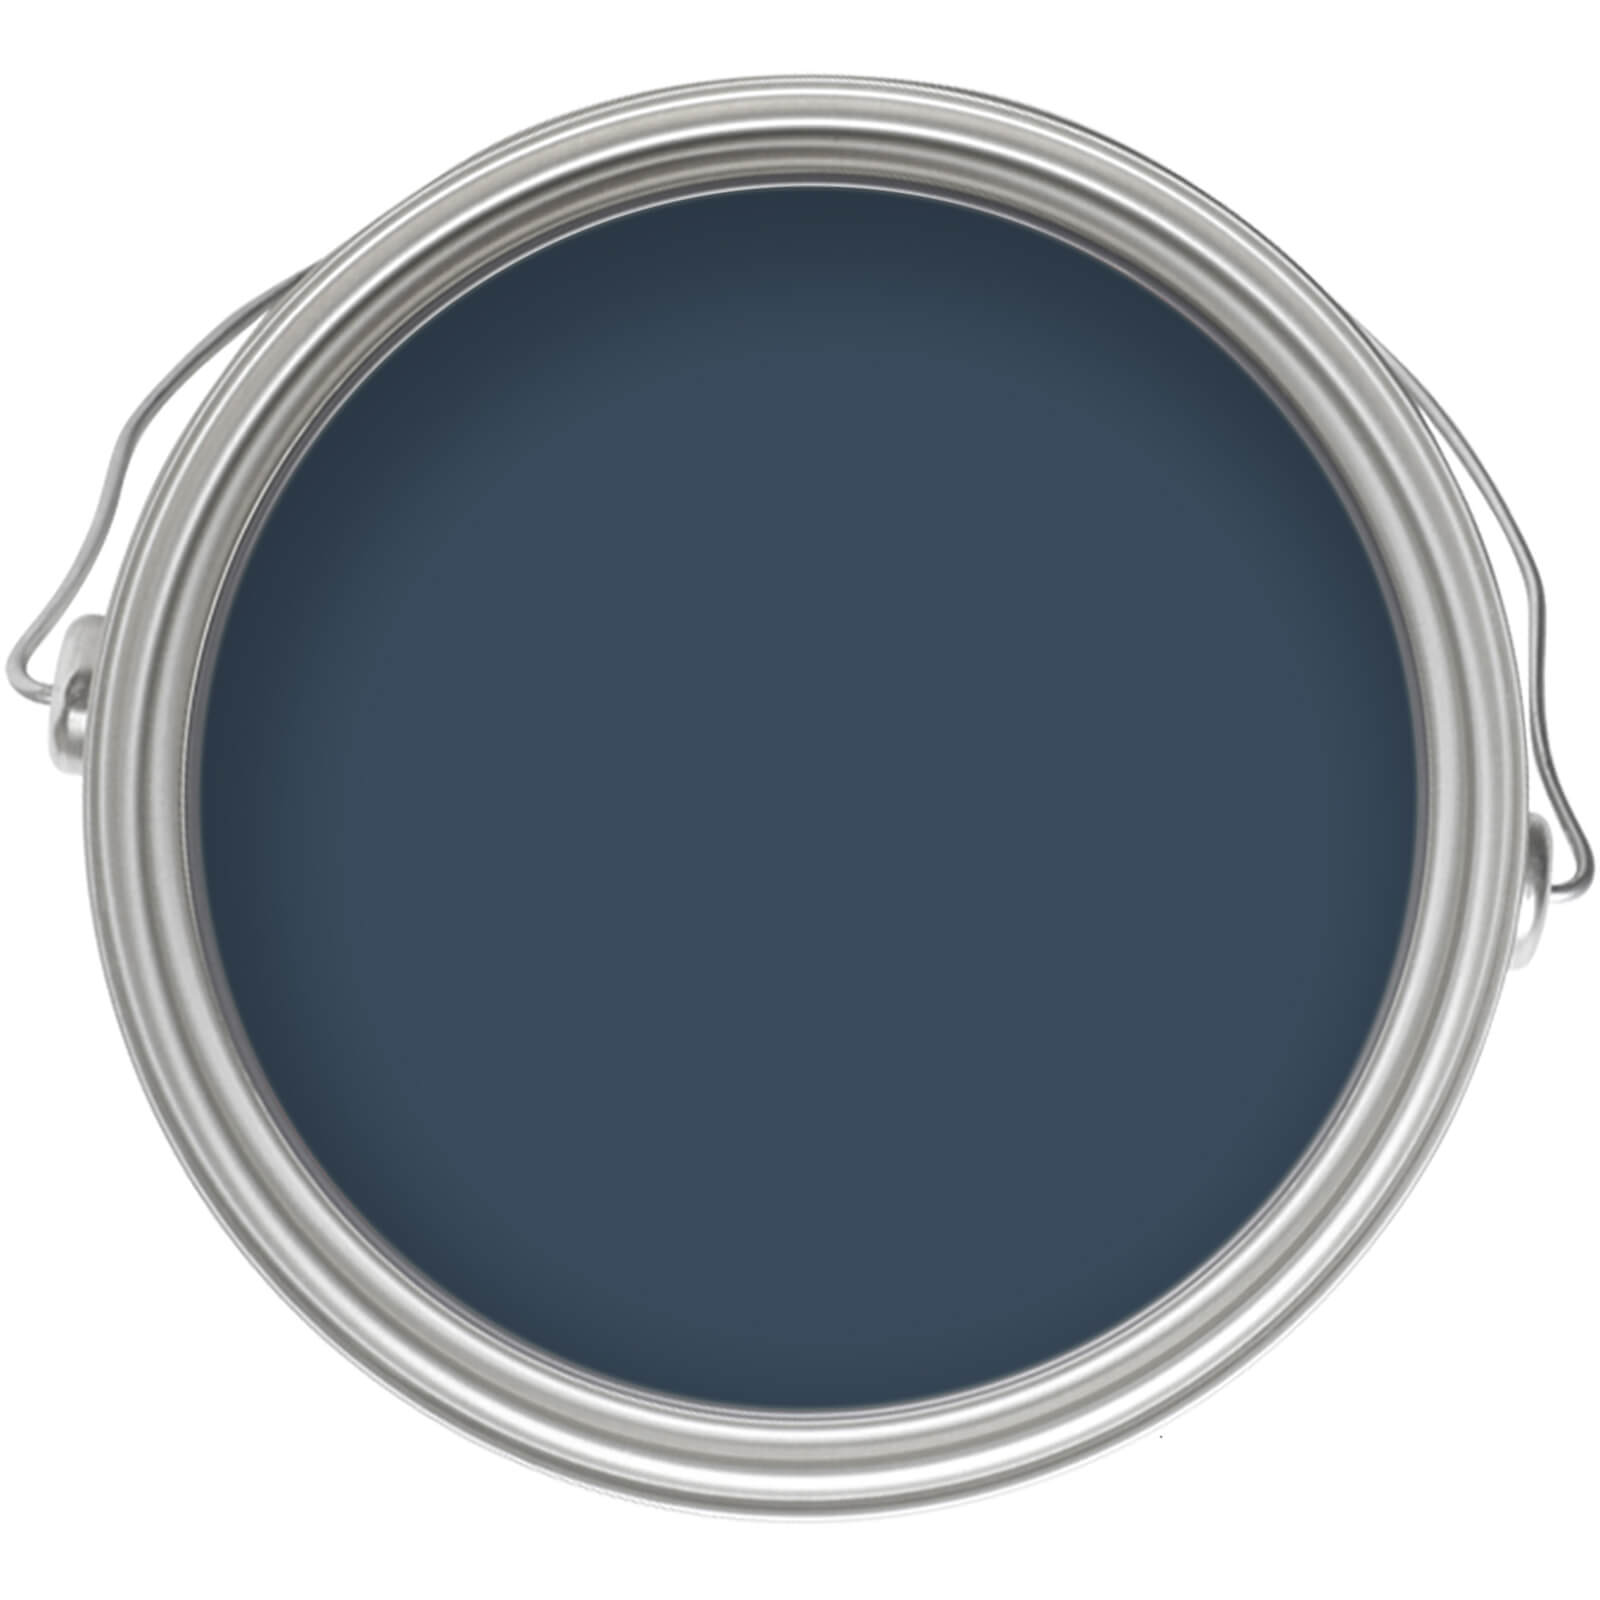 Homebase Exterior Gloss Paint - Oxford Blue 750ml